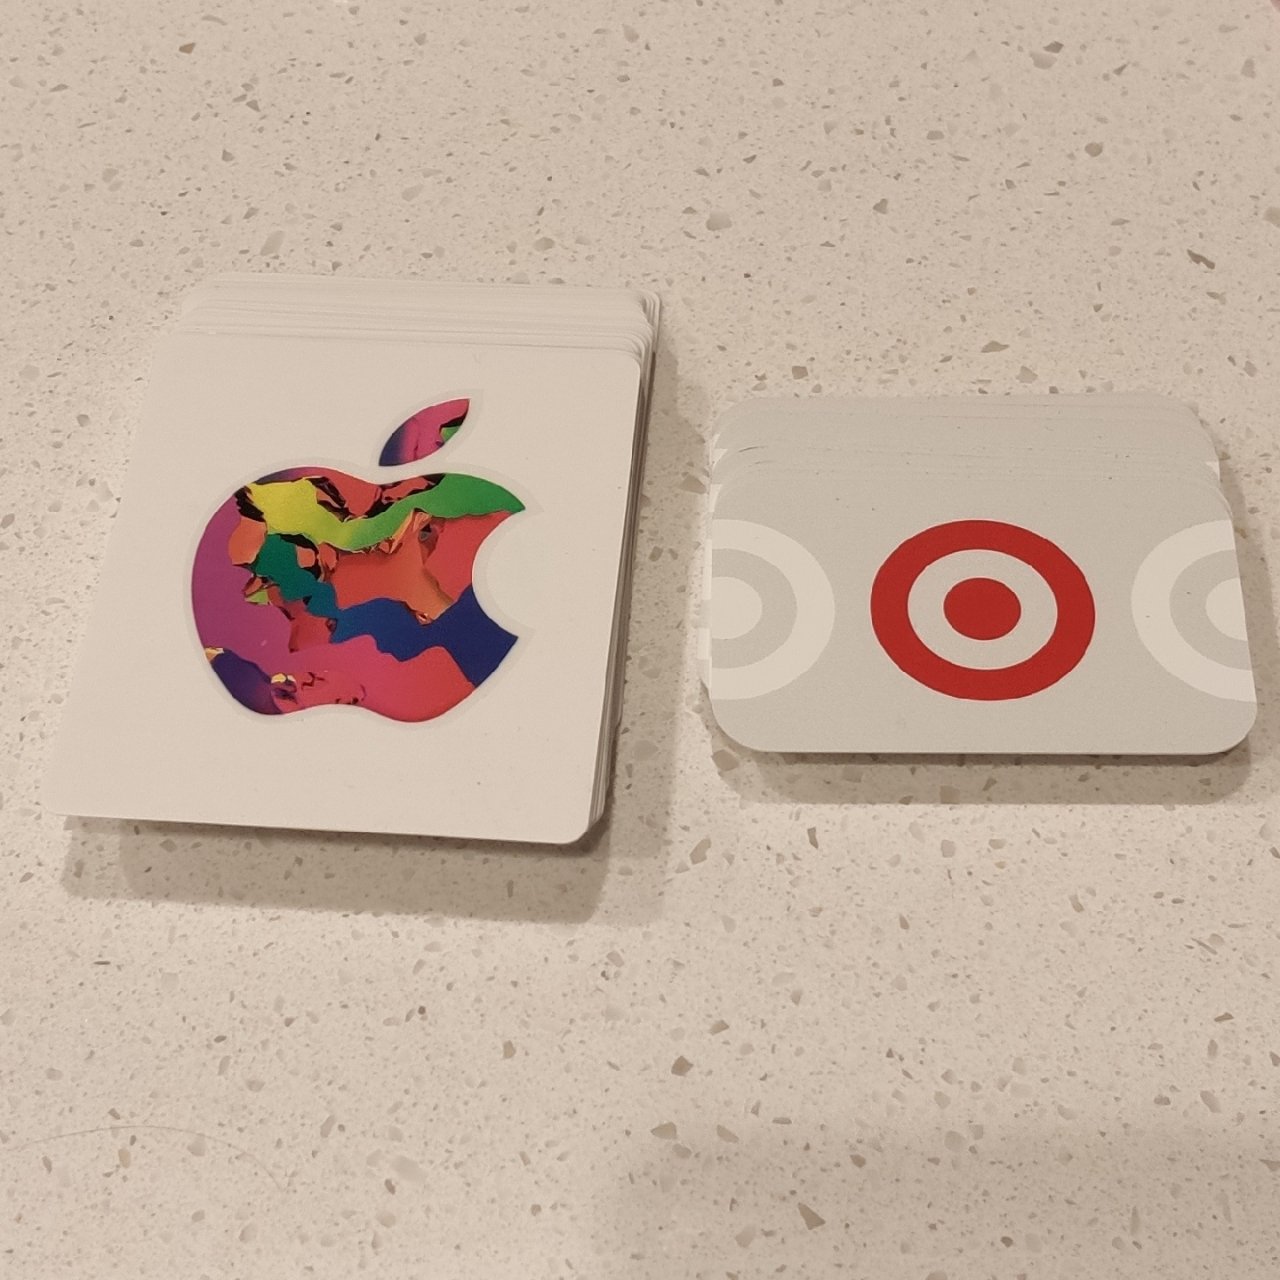 Apple 苹果,Target 塔吉特百货